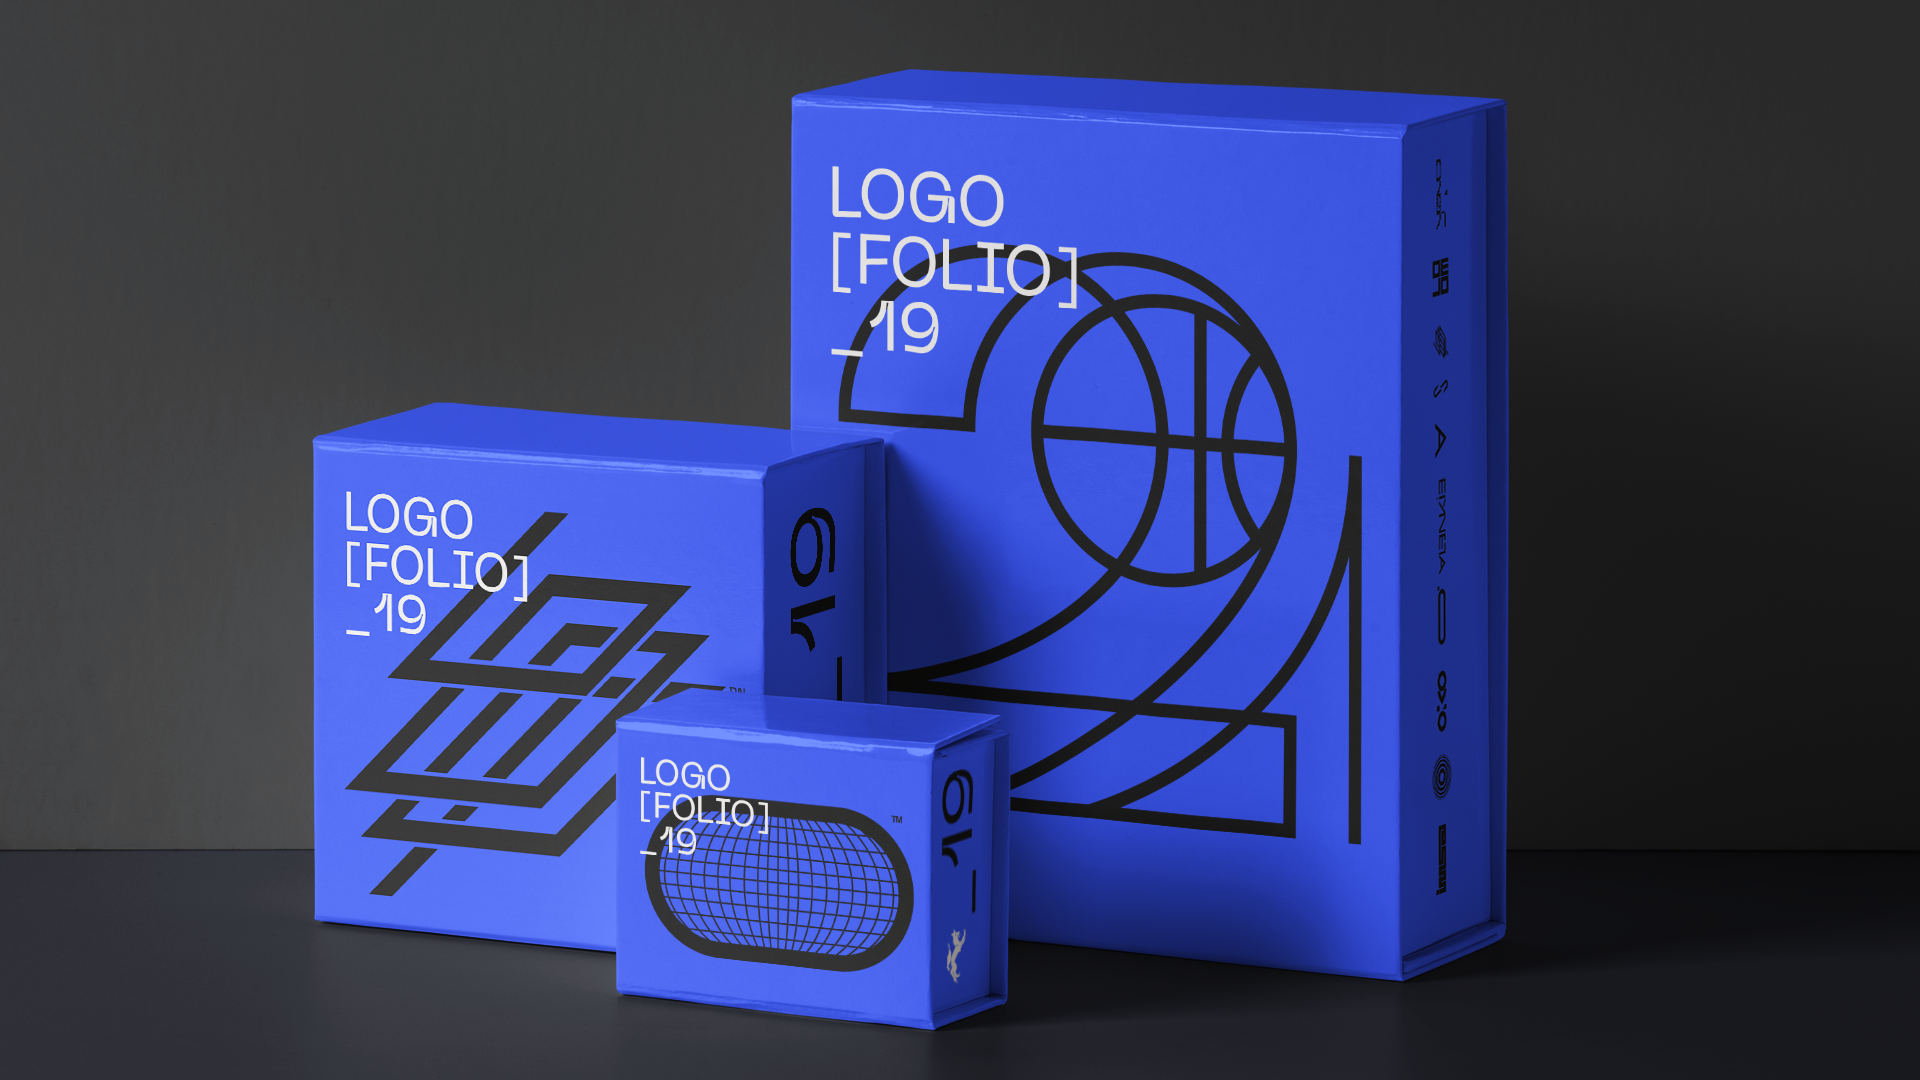 Guapo Design Studio by Esteban Ibarra Logofolio 2019 logo designer